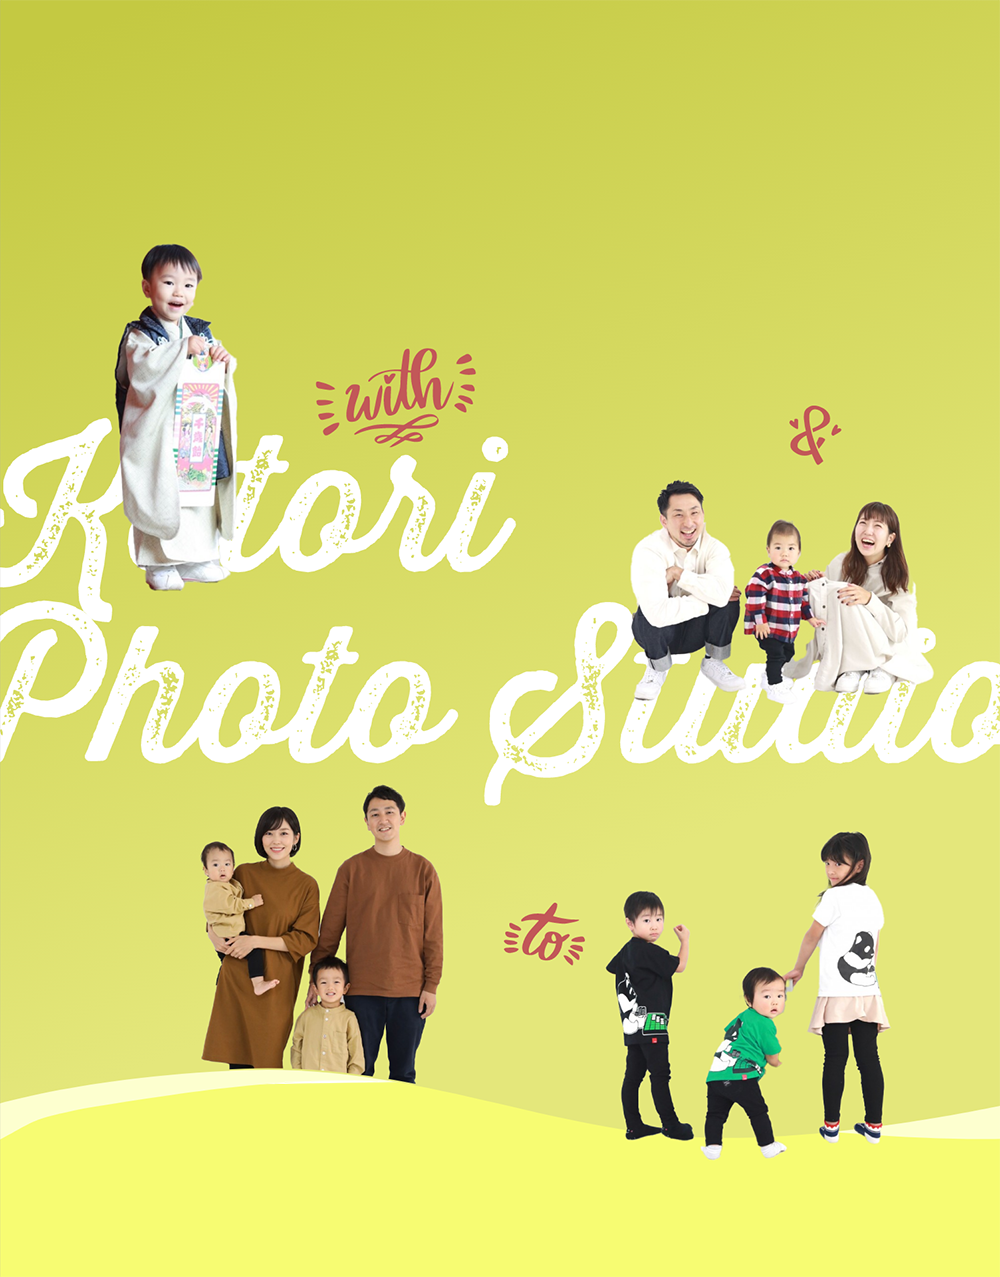 Kotori Photo Studio